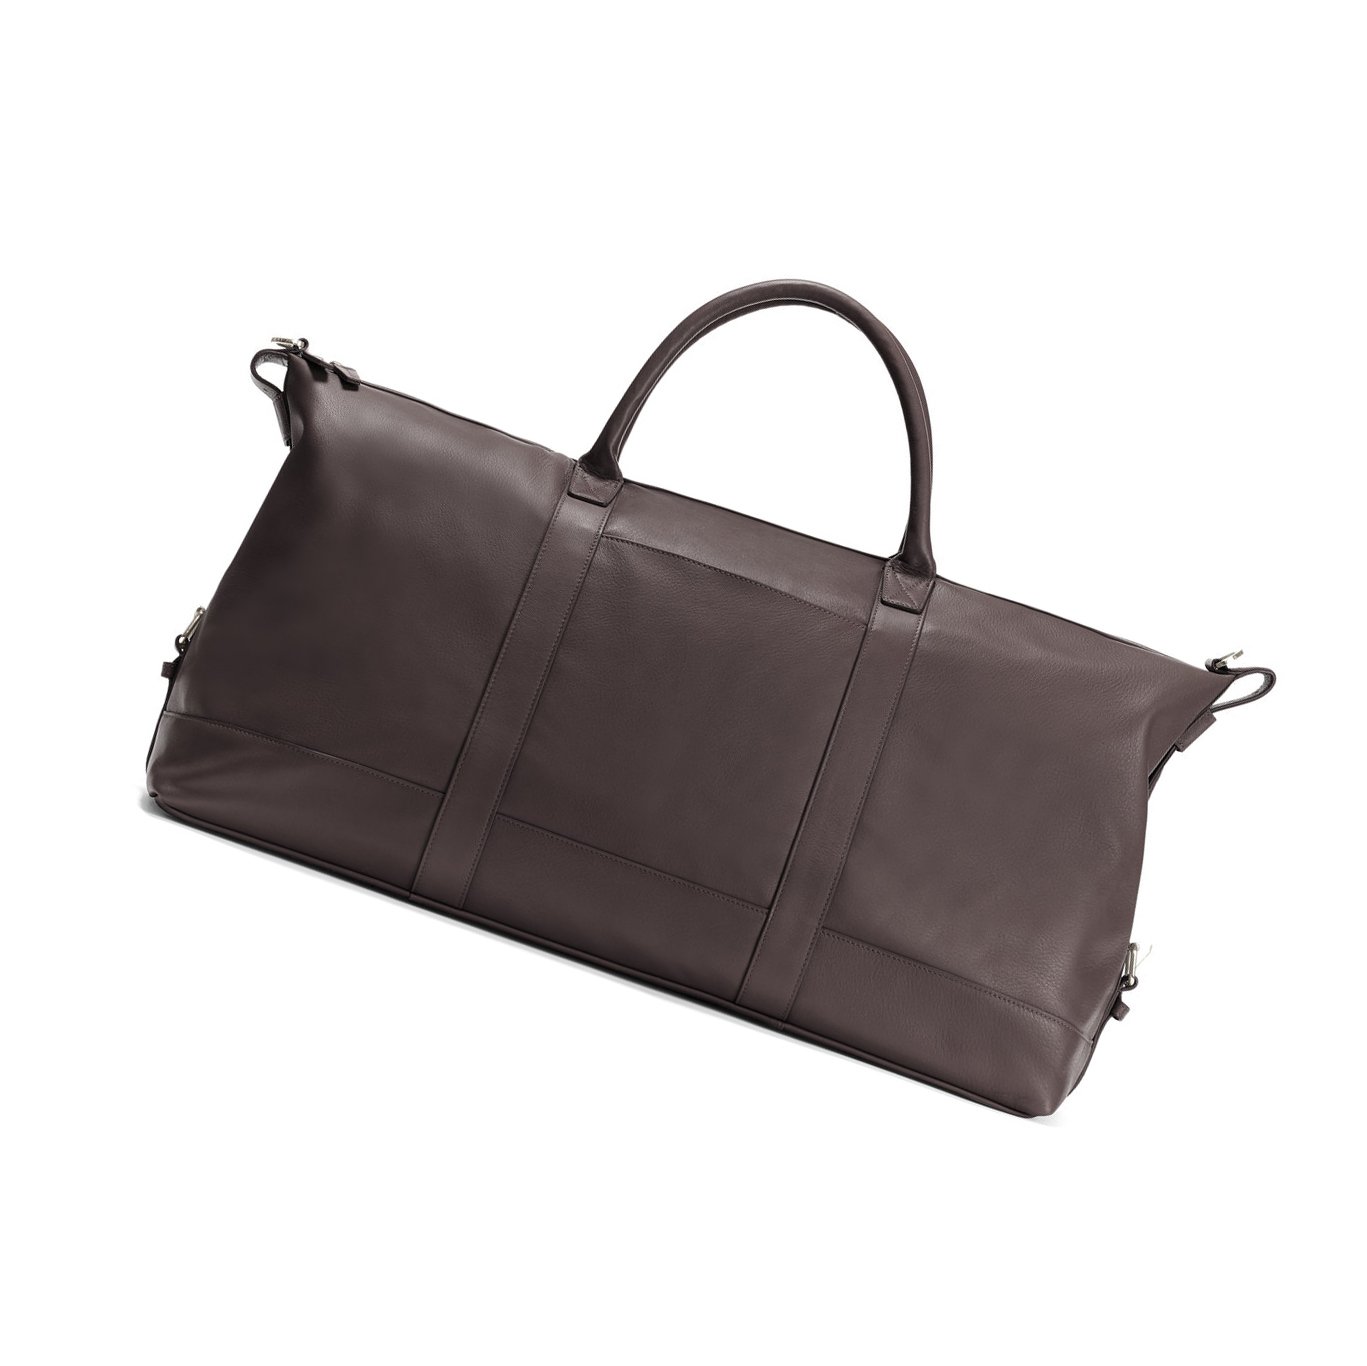 leather handbag duffel bags